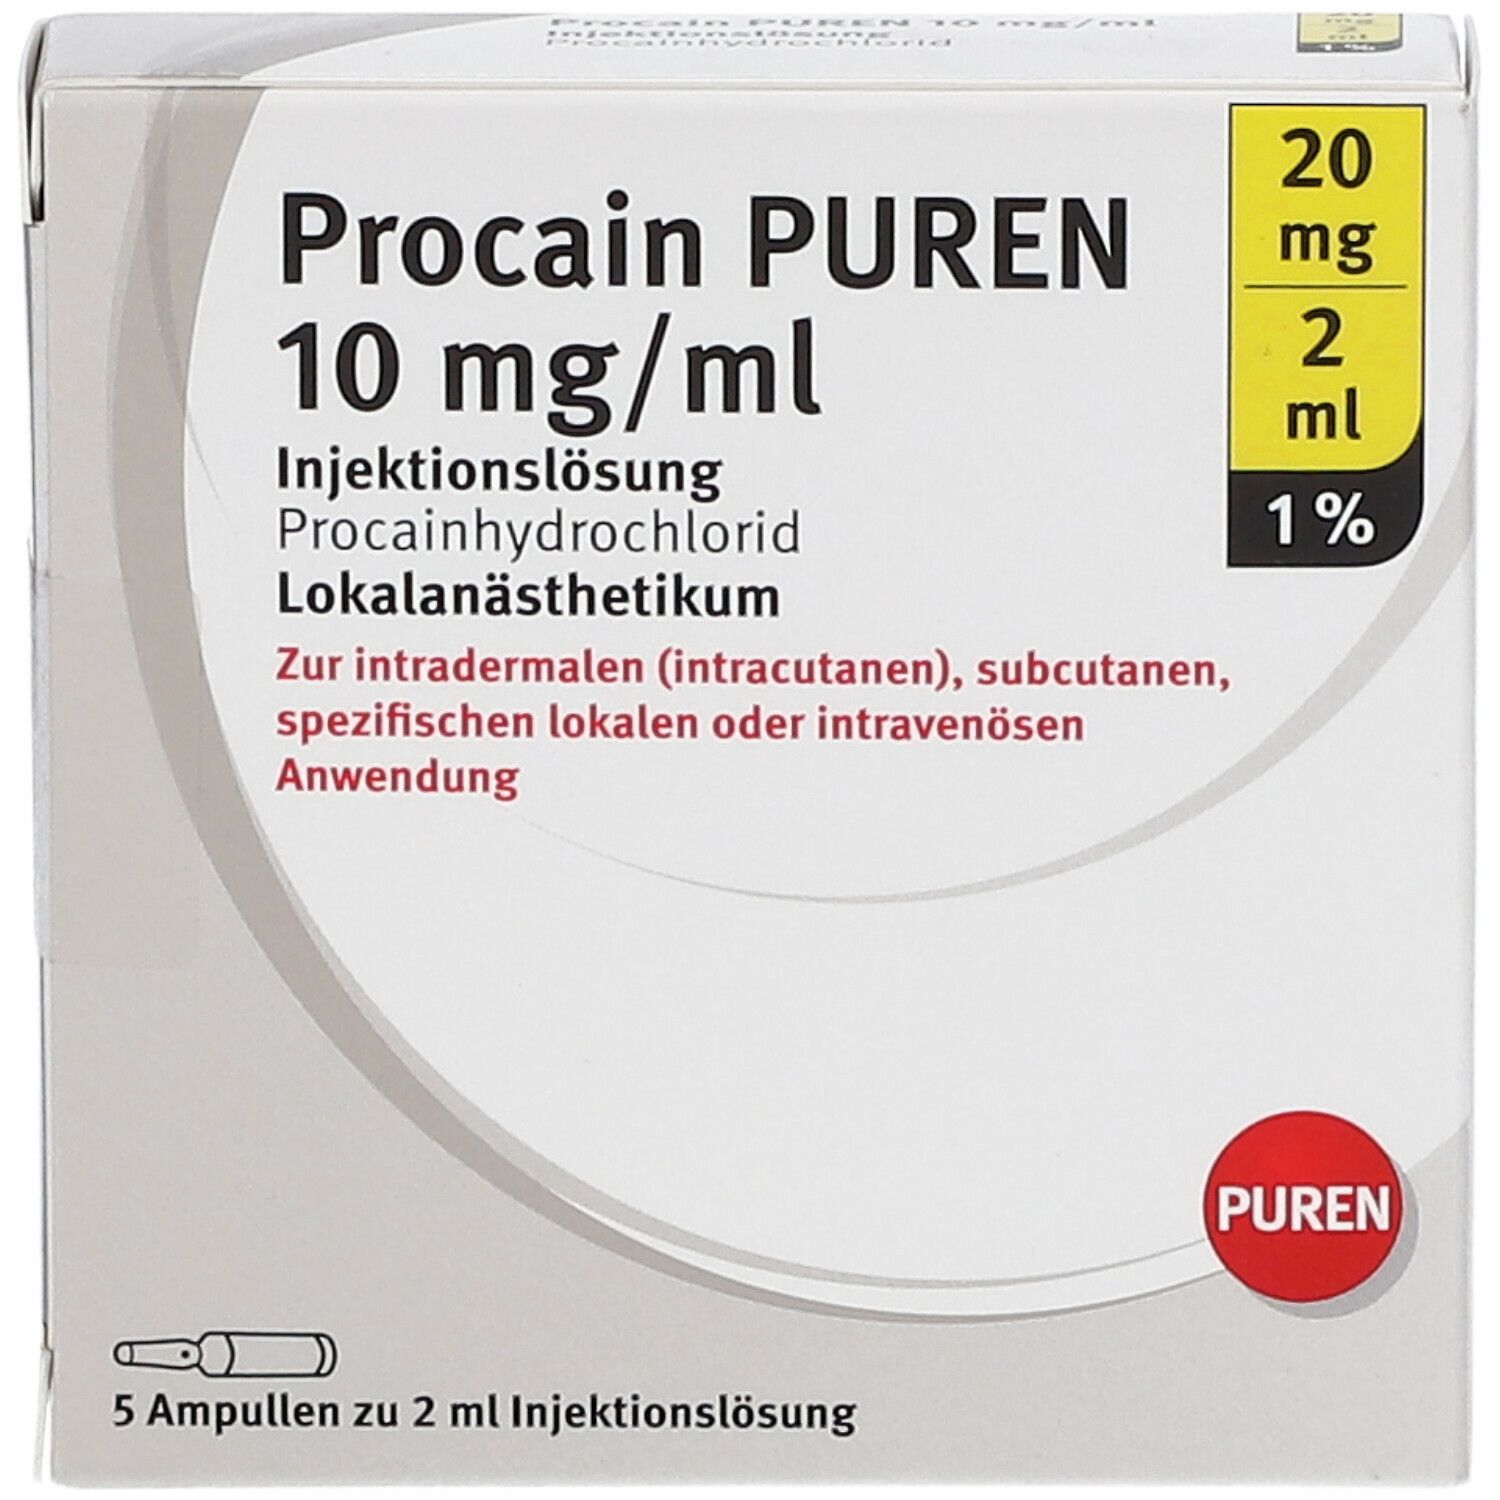 Procain PUREN 10mg/ml